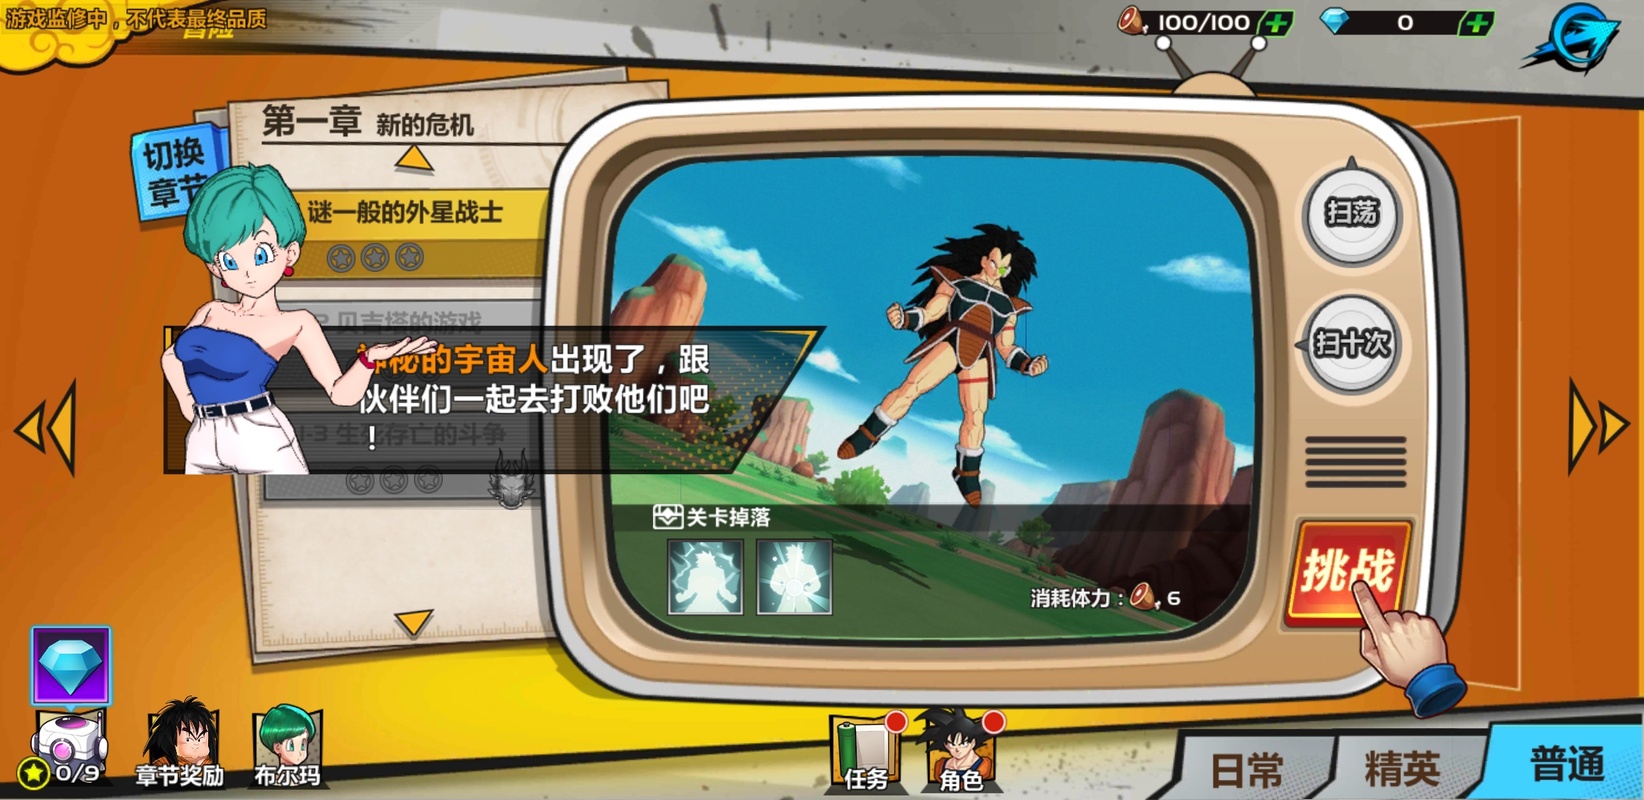 Dragon Ball Awakening 4.5.1 APK for Android Screenshot 3